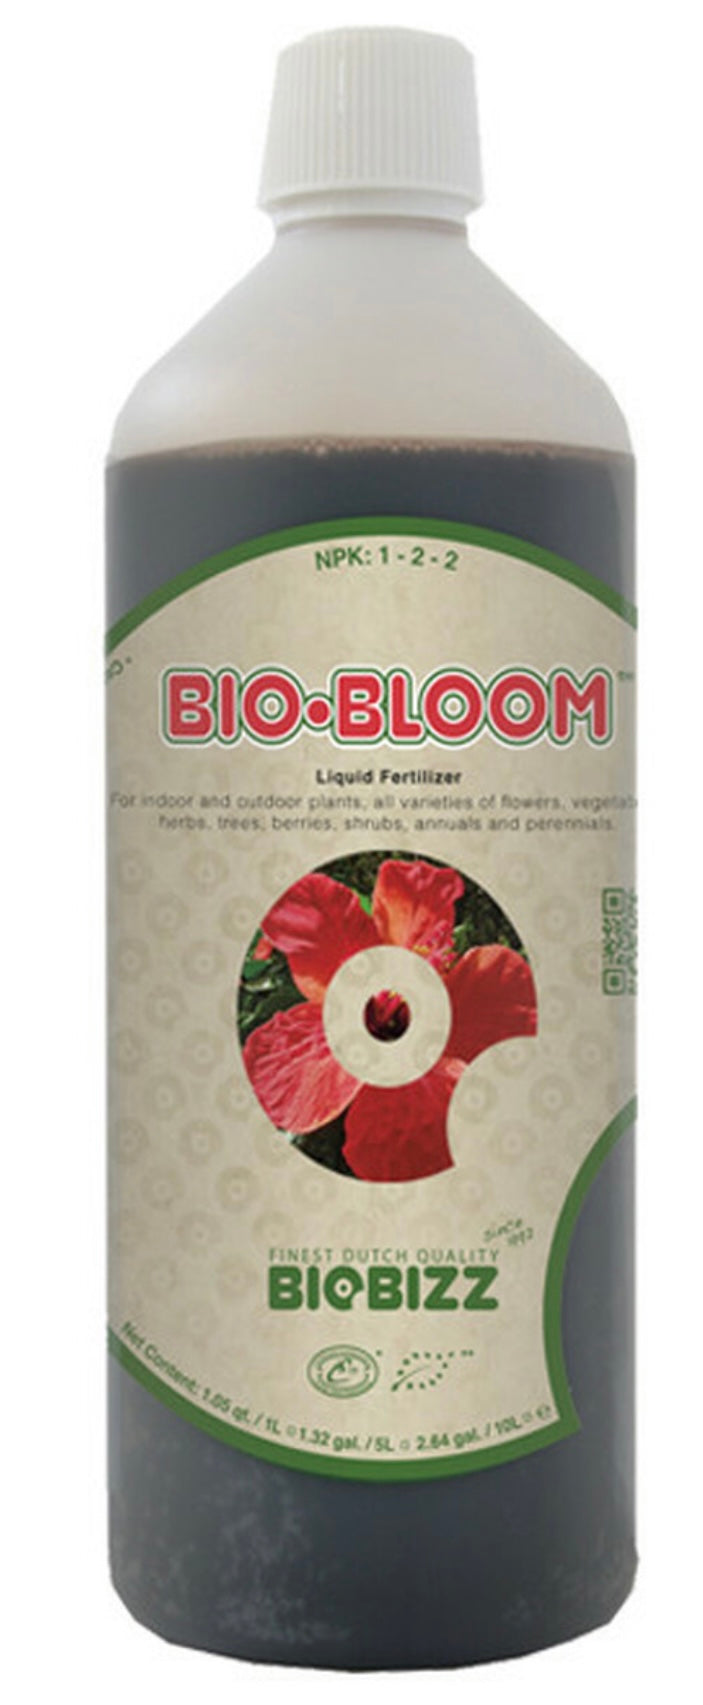 BioBuzz Bio-Bloom 1-2-2